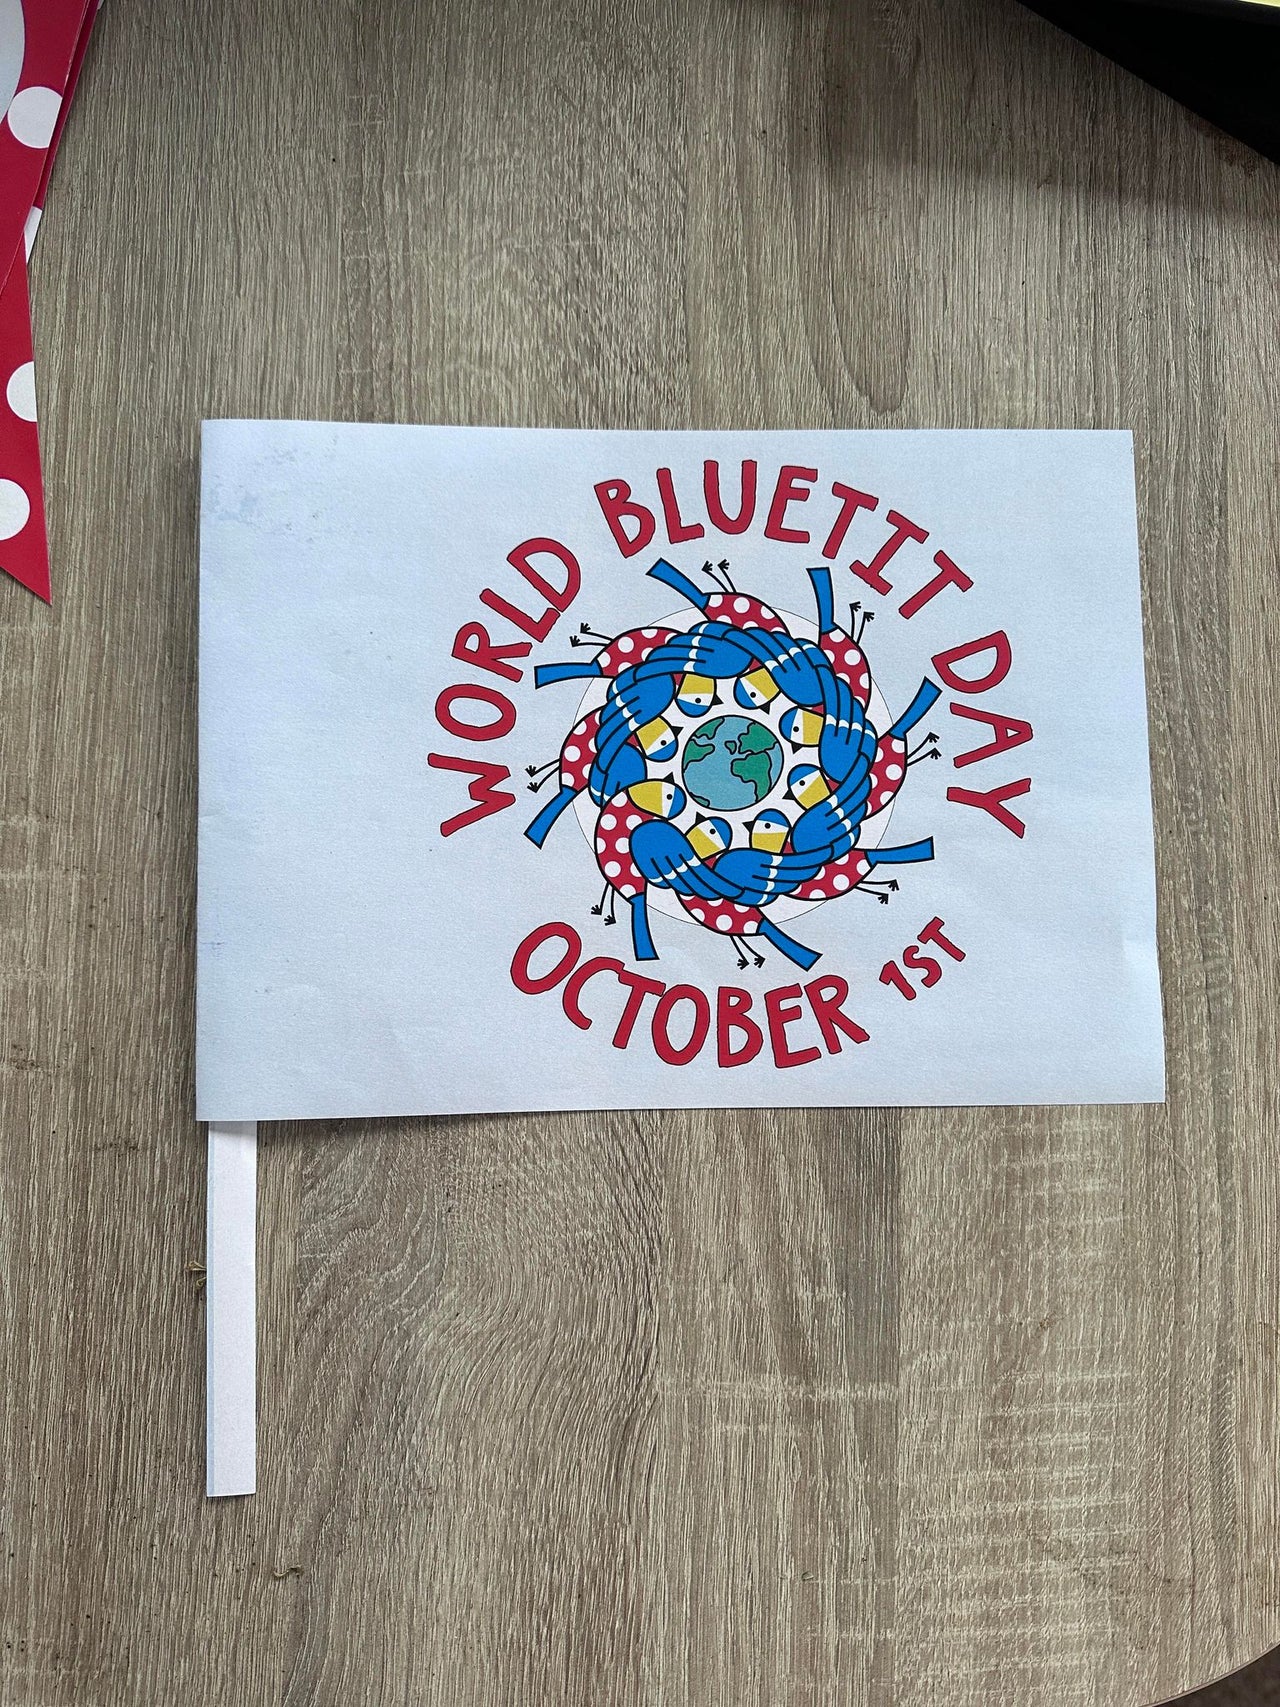 World Bluetit Day Printables